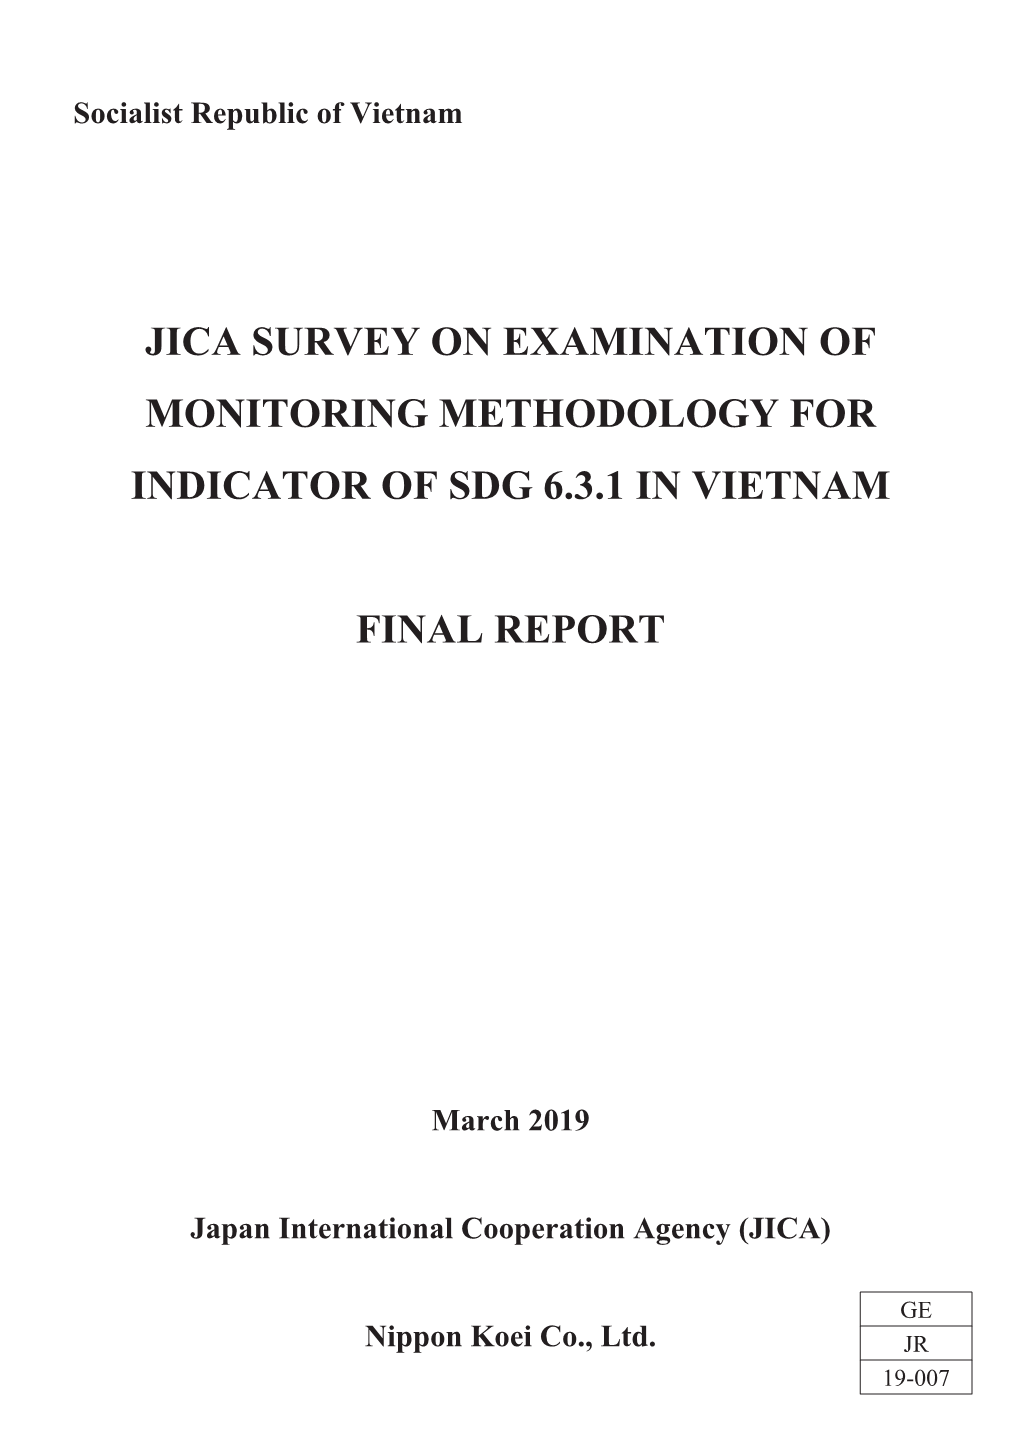 Jica Survey on Examination of Monitoring Methodology for Indicator of Sdg 6.3.1 in Vietnam